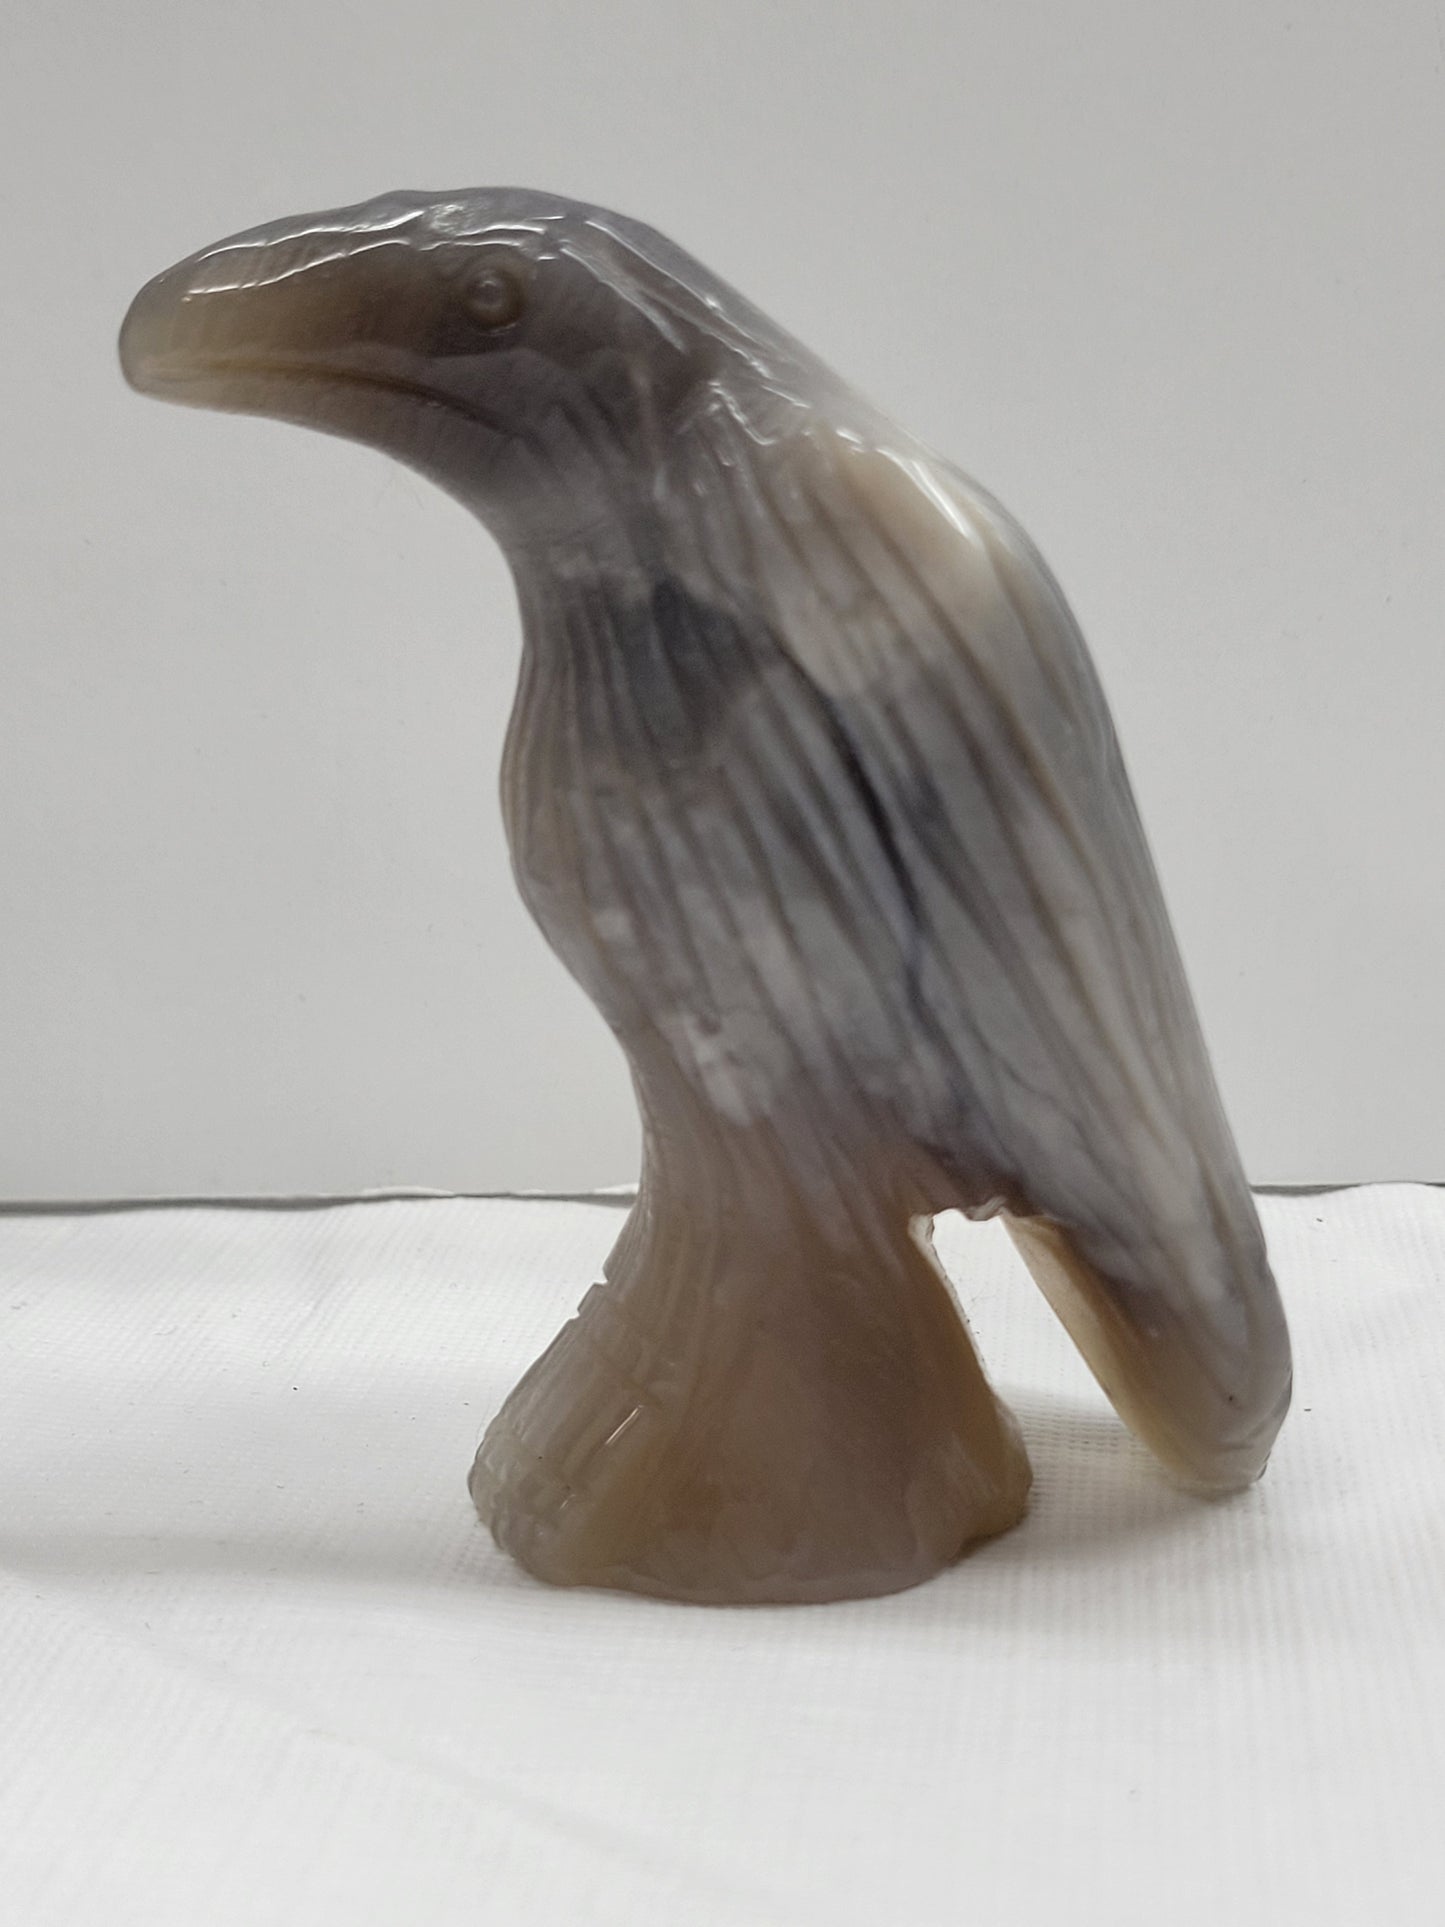 Raven (bird) carving